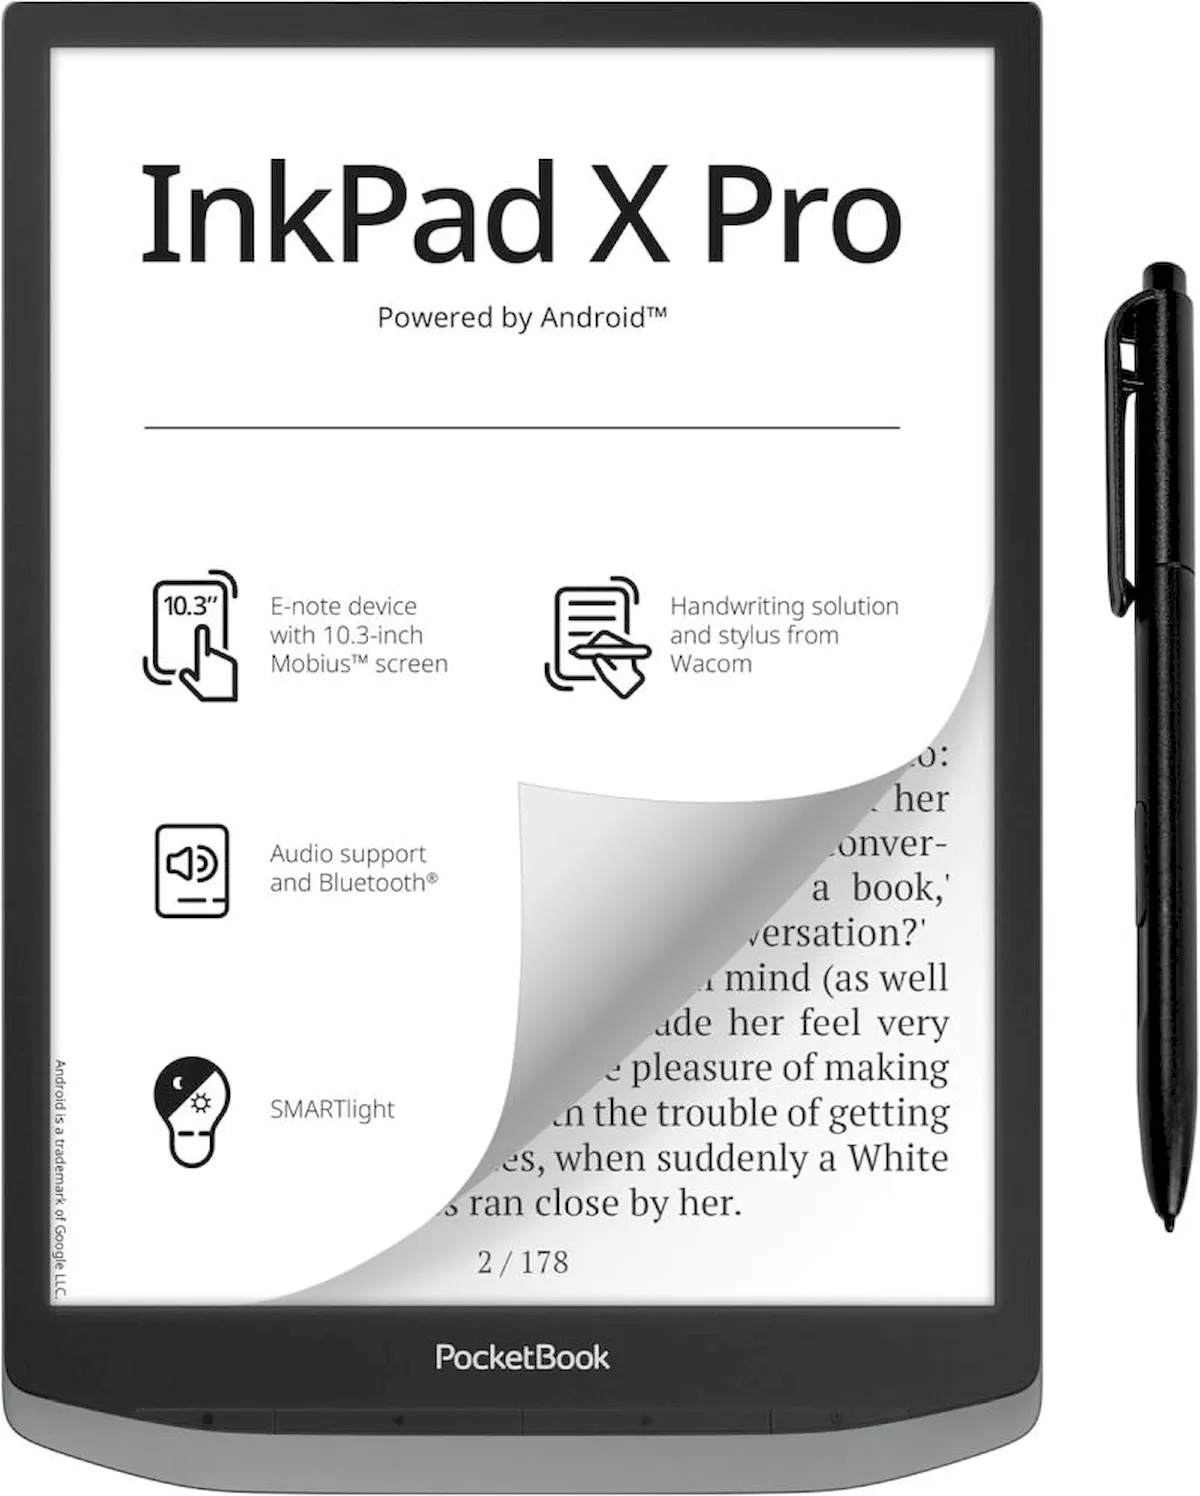 InkPad X Pro, um tablet E Ink de 10.3" com Android 8.1